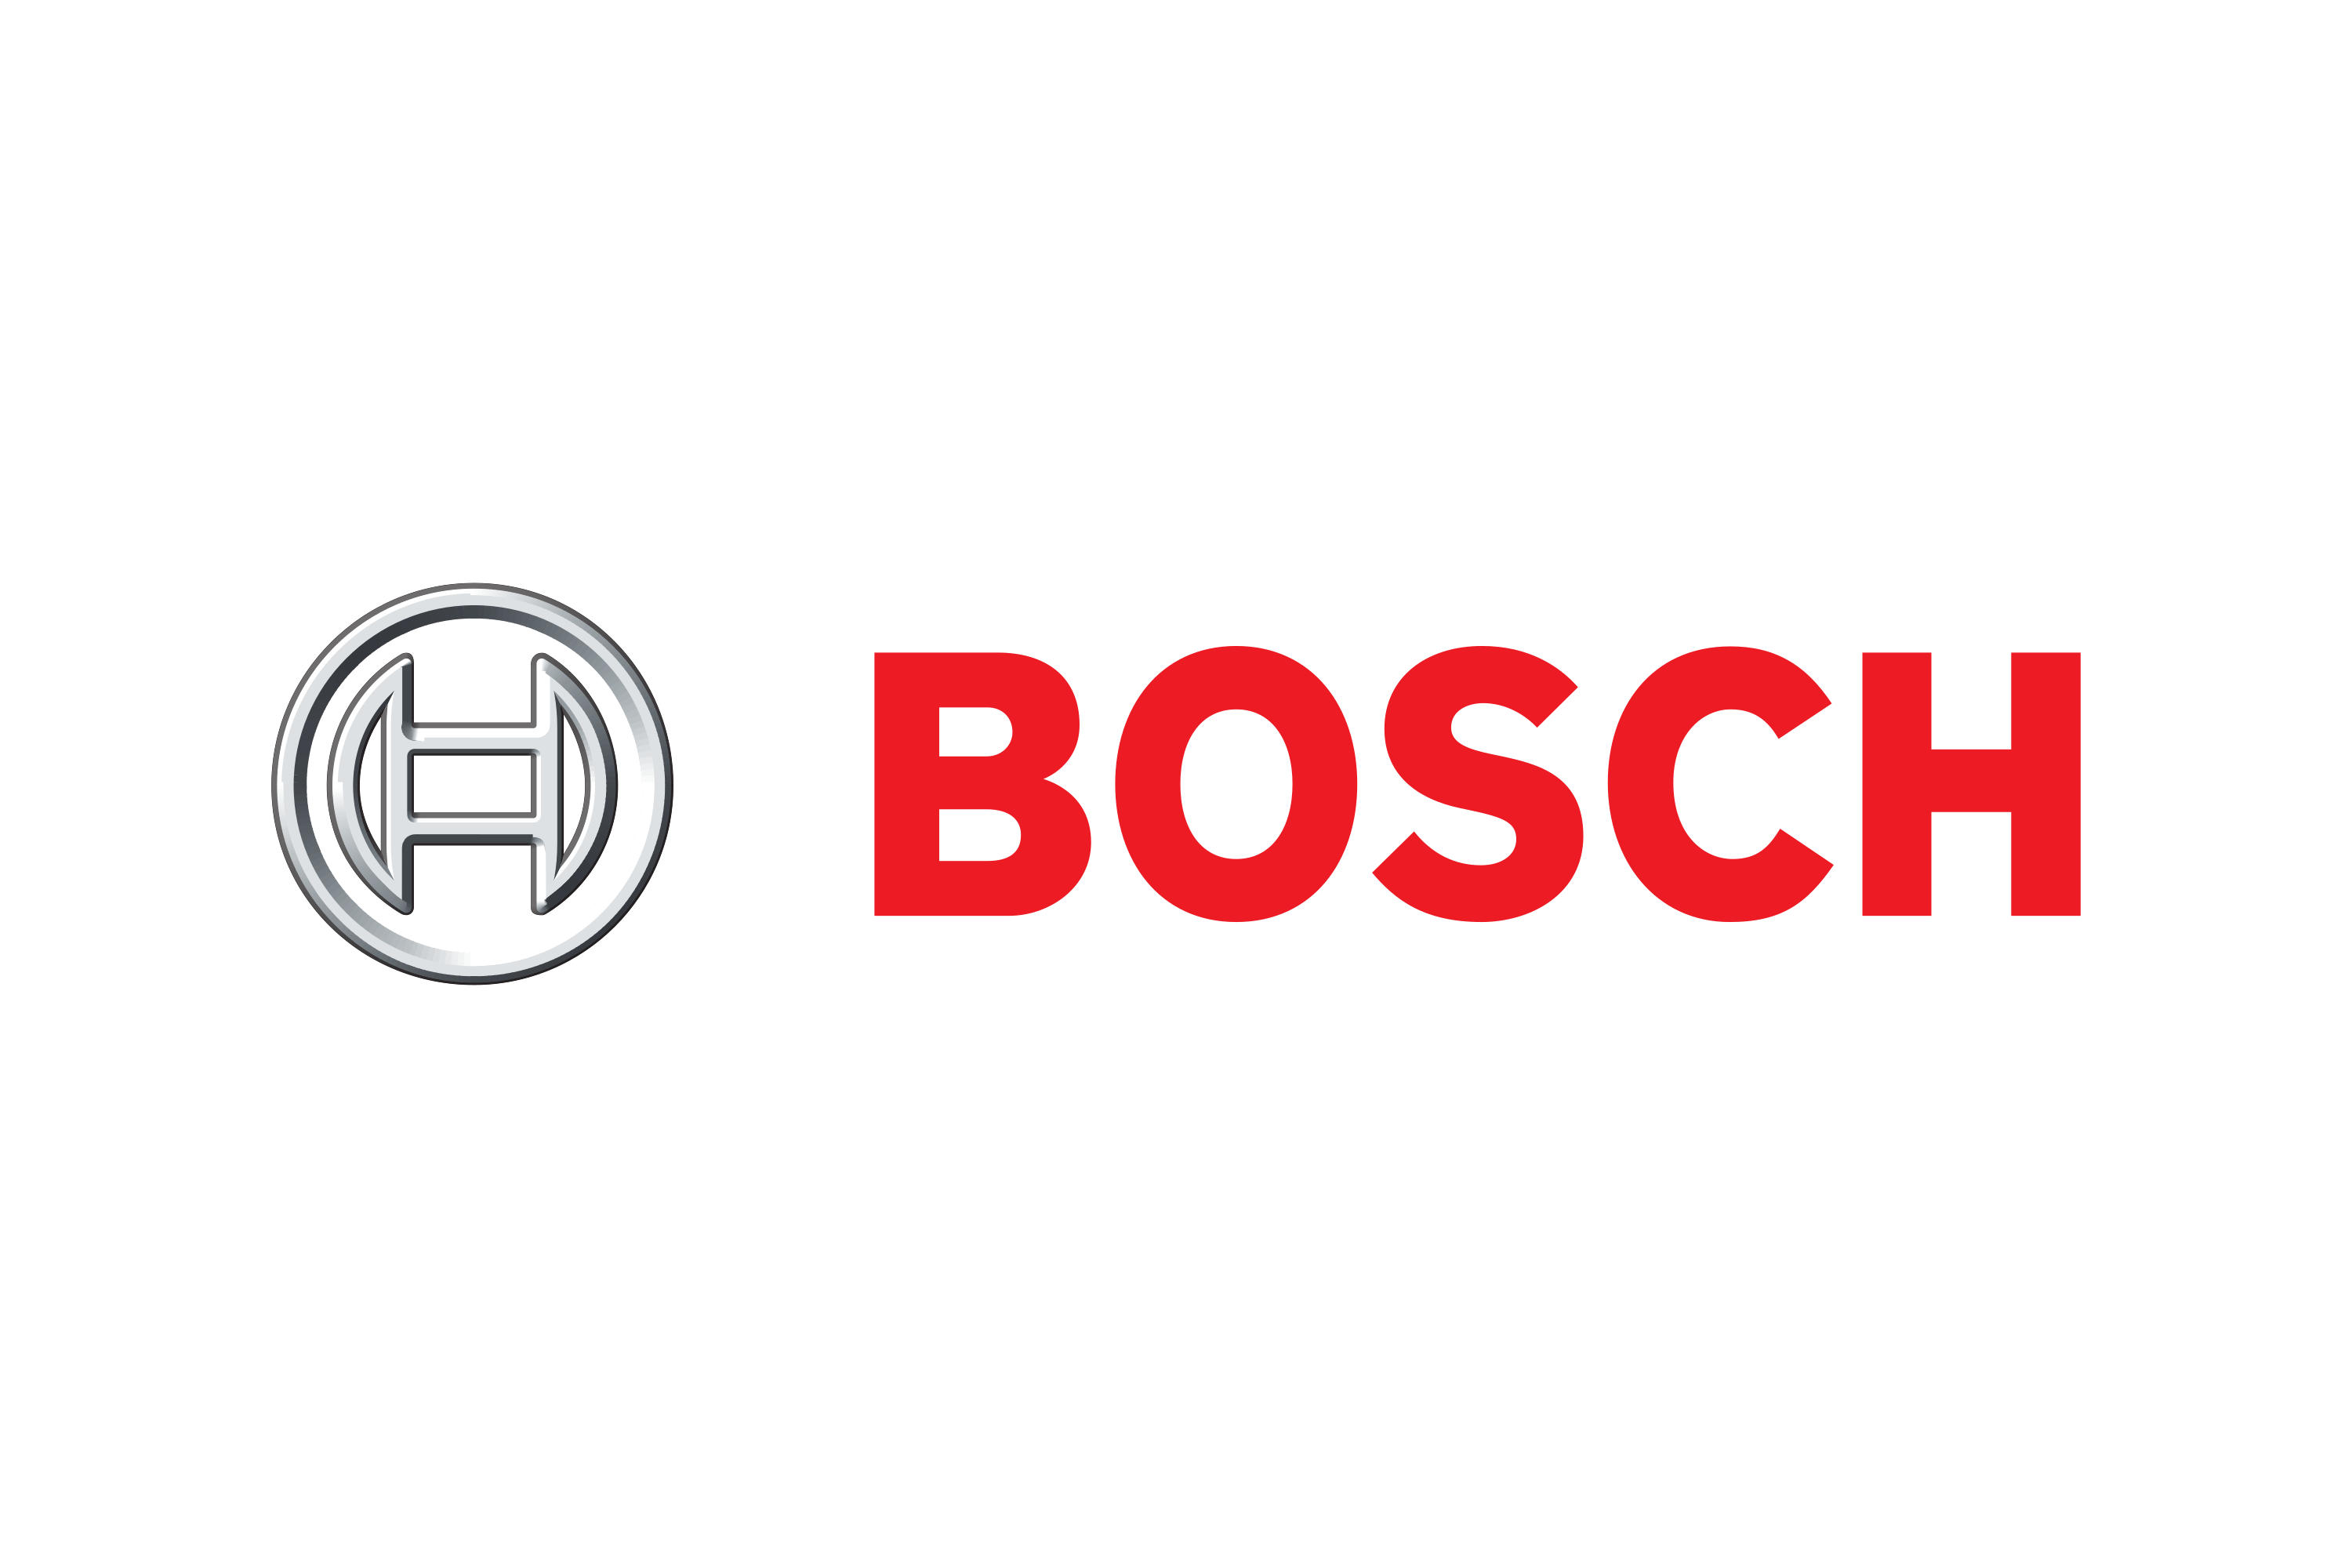 Download Robert Bosch GmbH Logo In SVG Vector Or PNG File Format Logo Wine